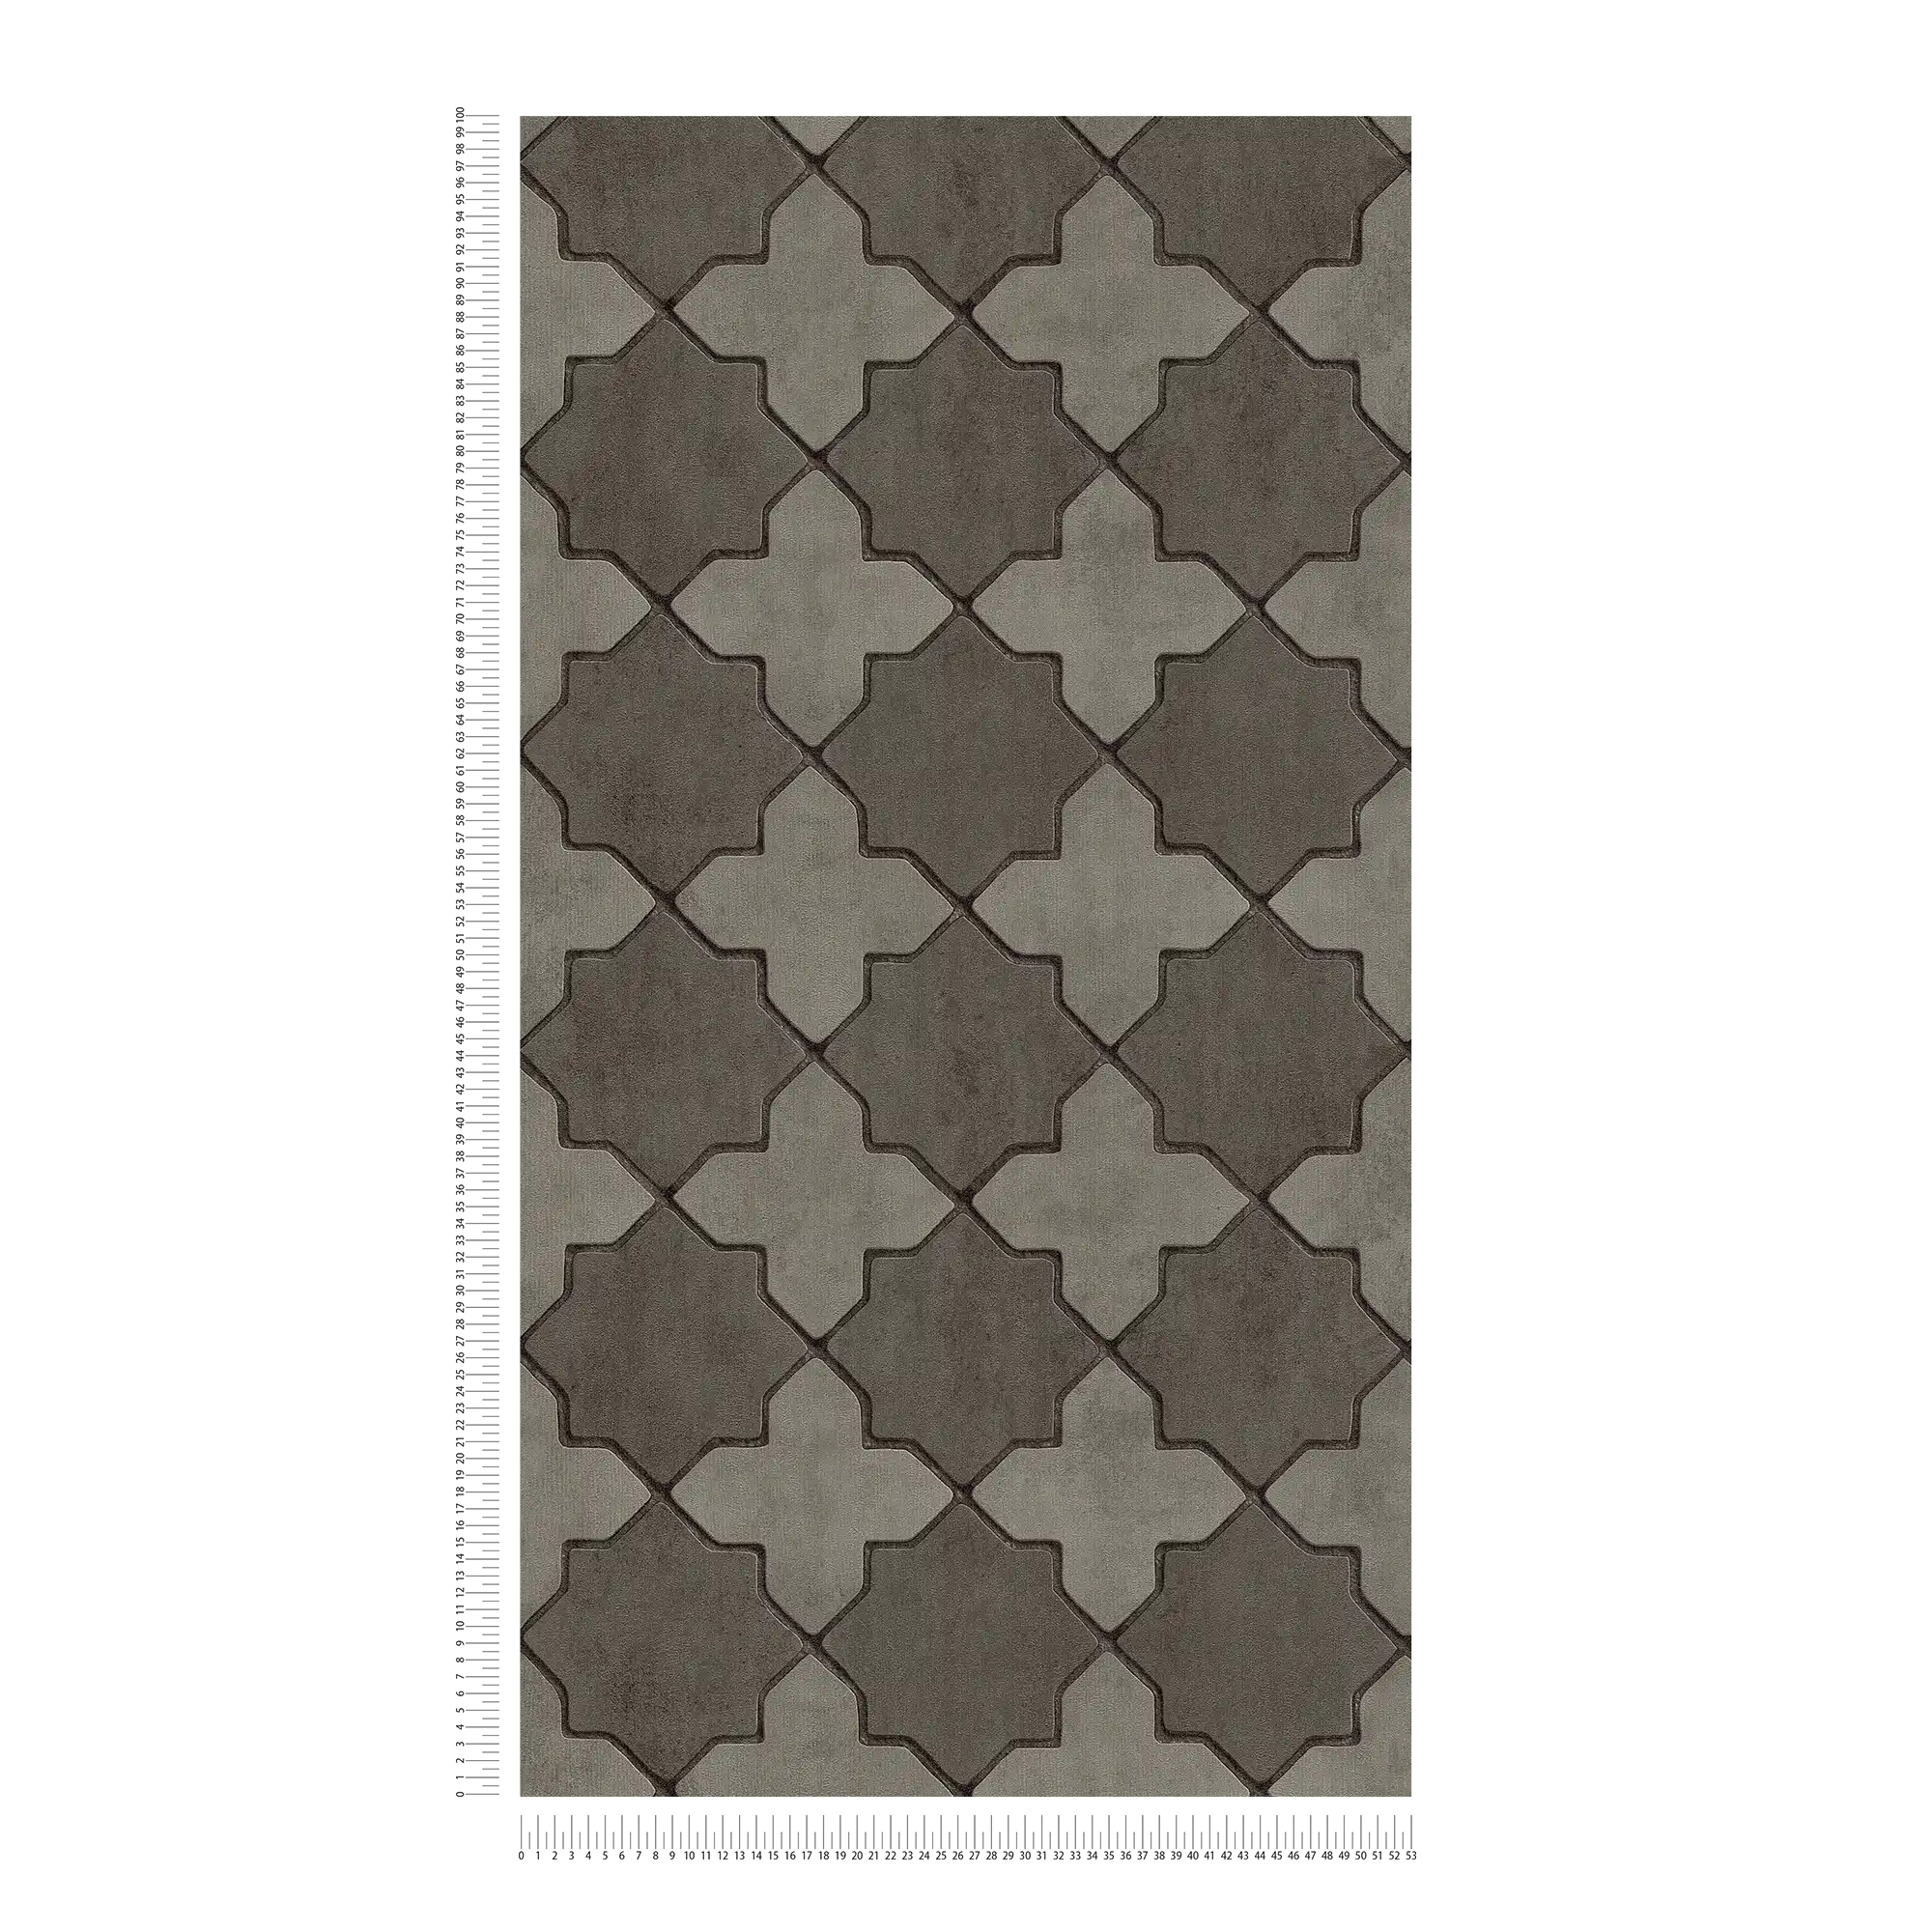             Tile wallpaper mosaic look - grey, black
        